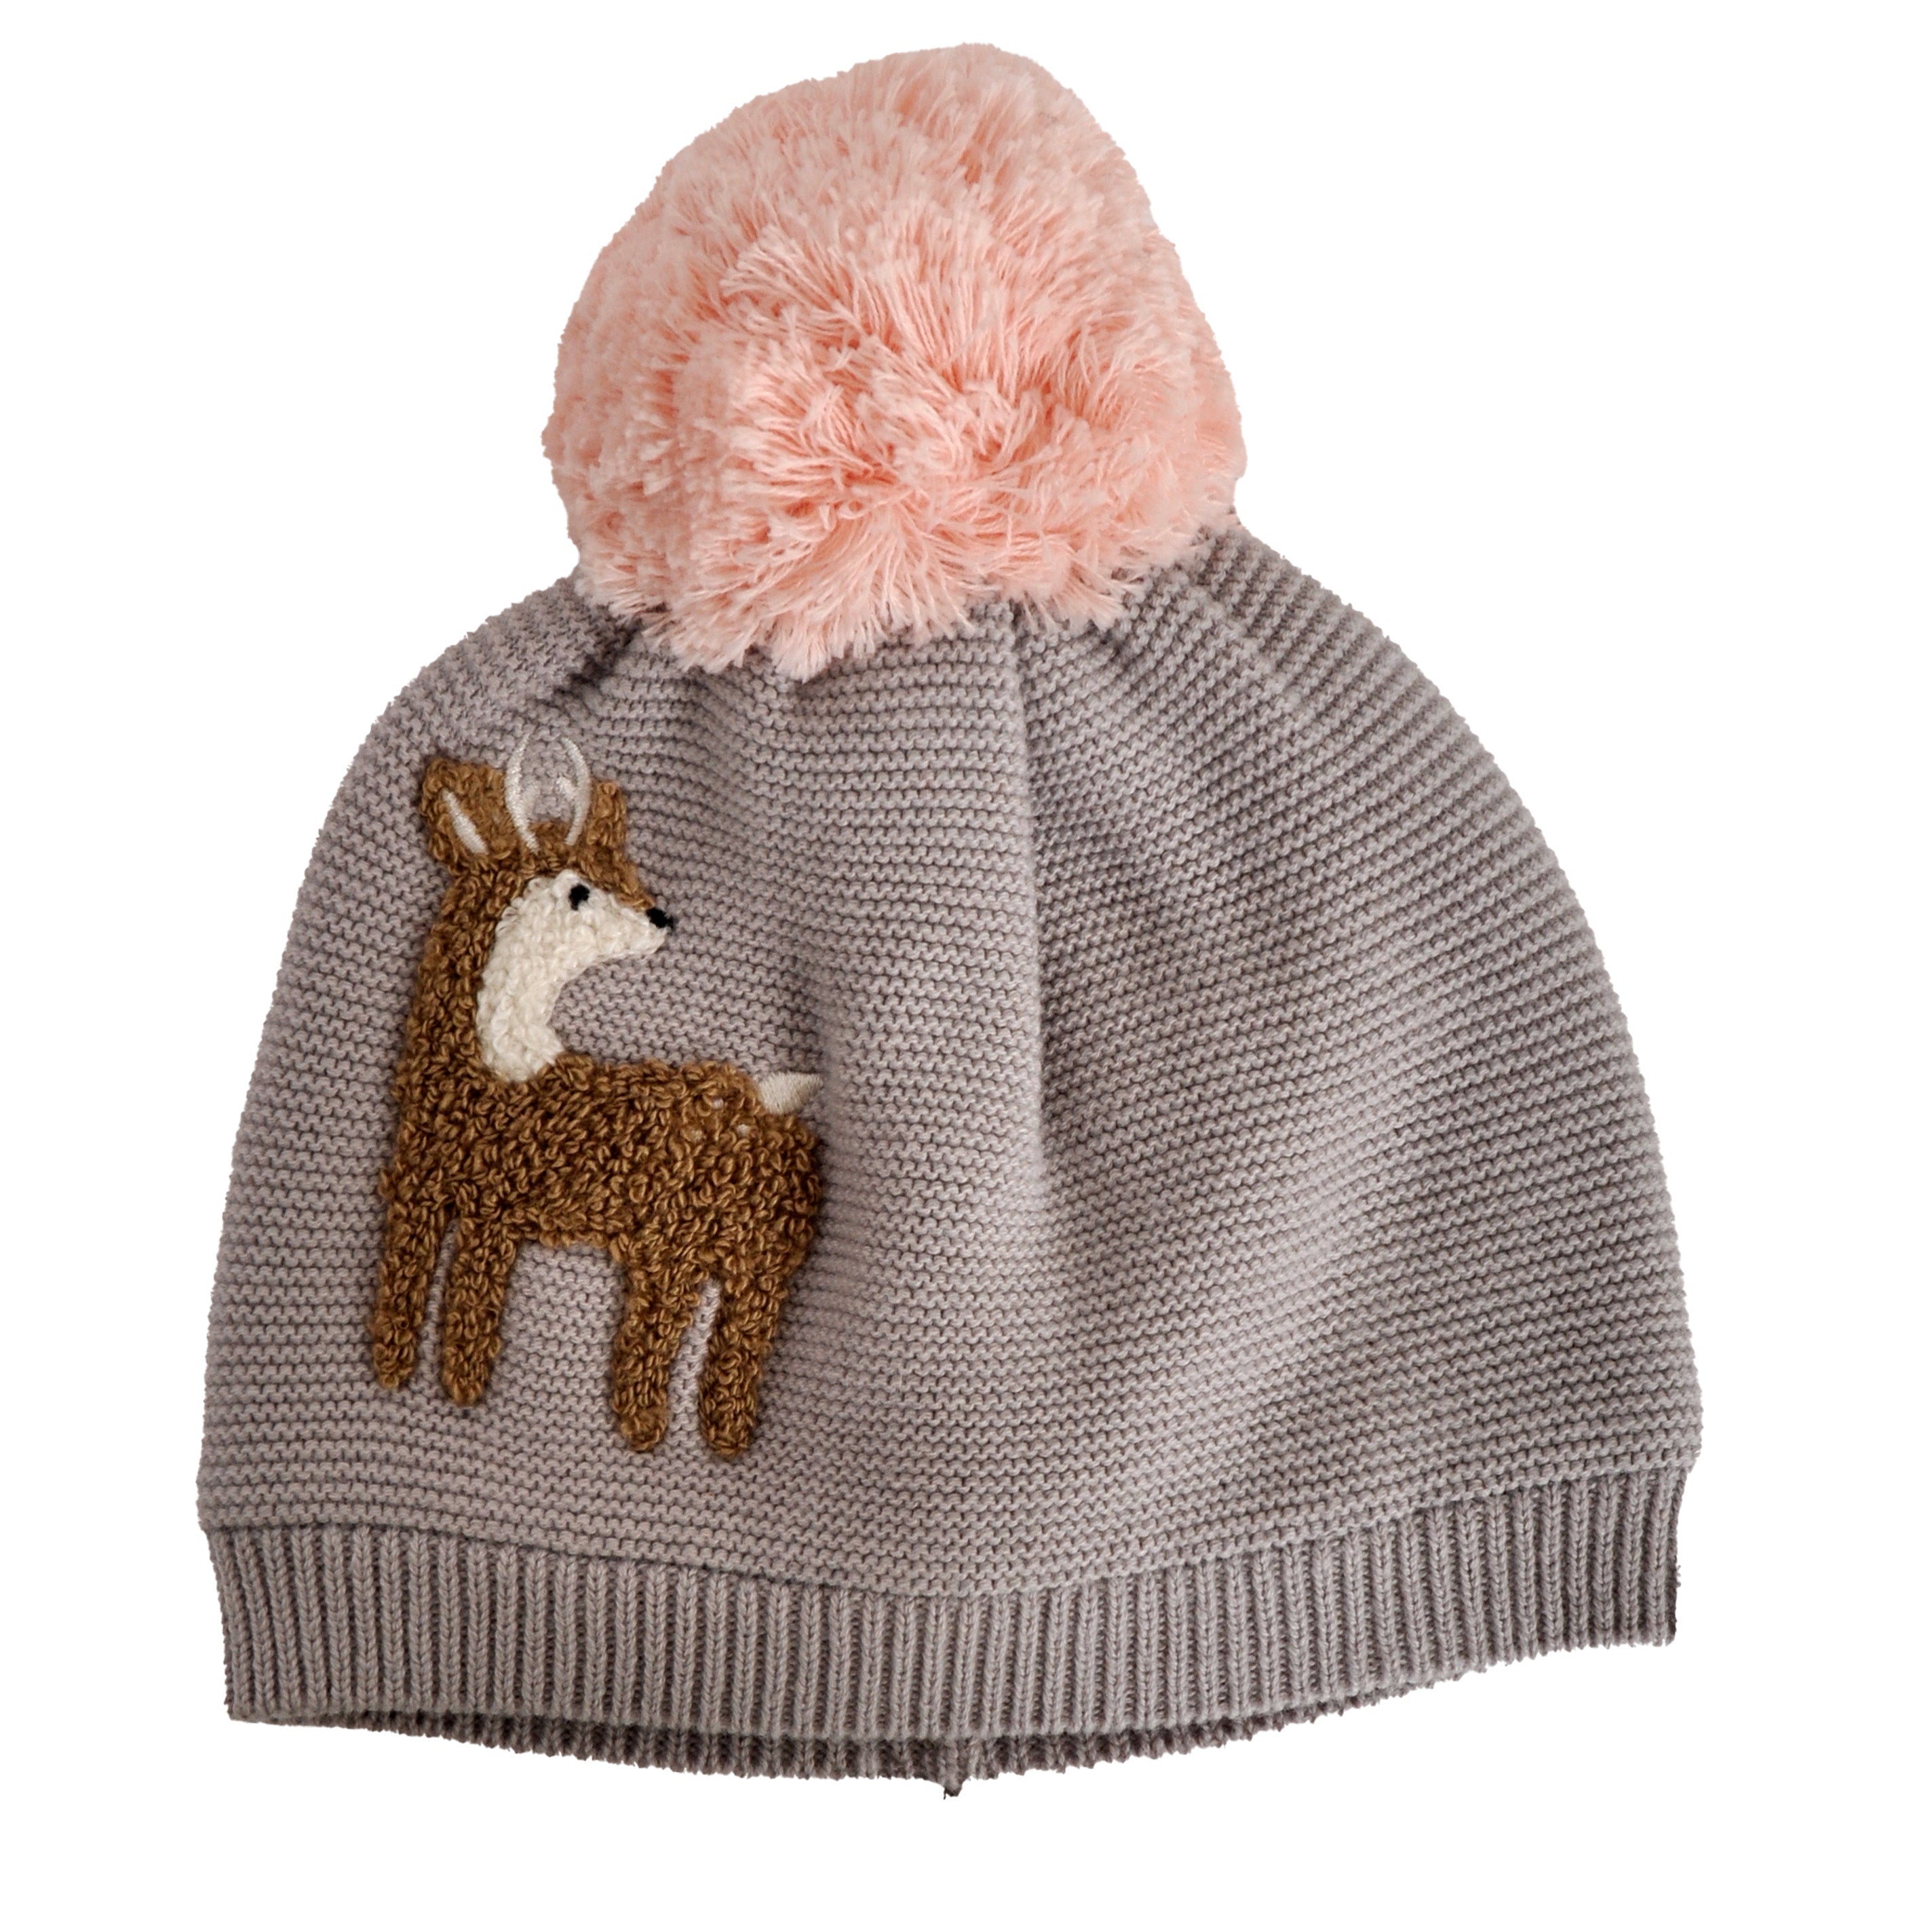 Just Plain Hat — My Secret Wish Knitting